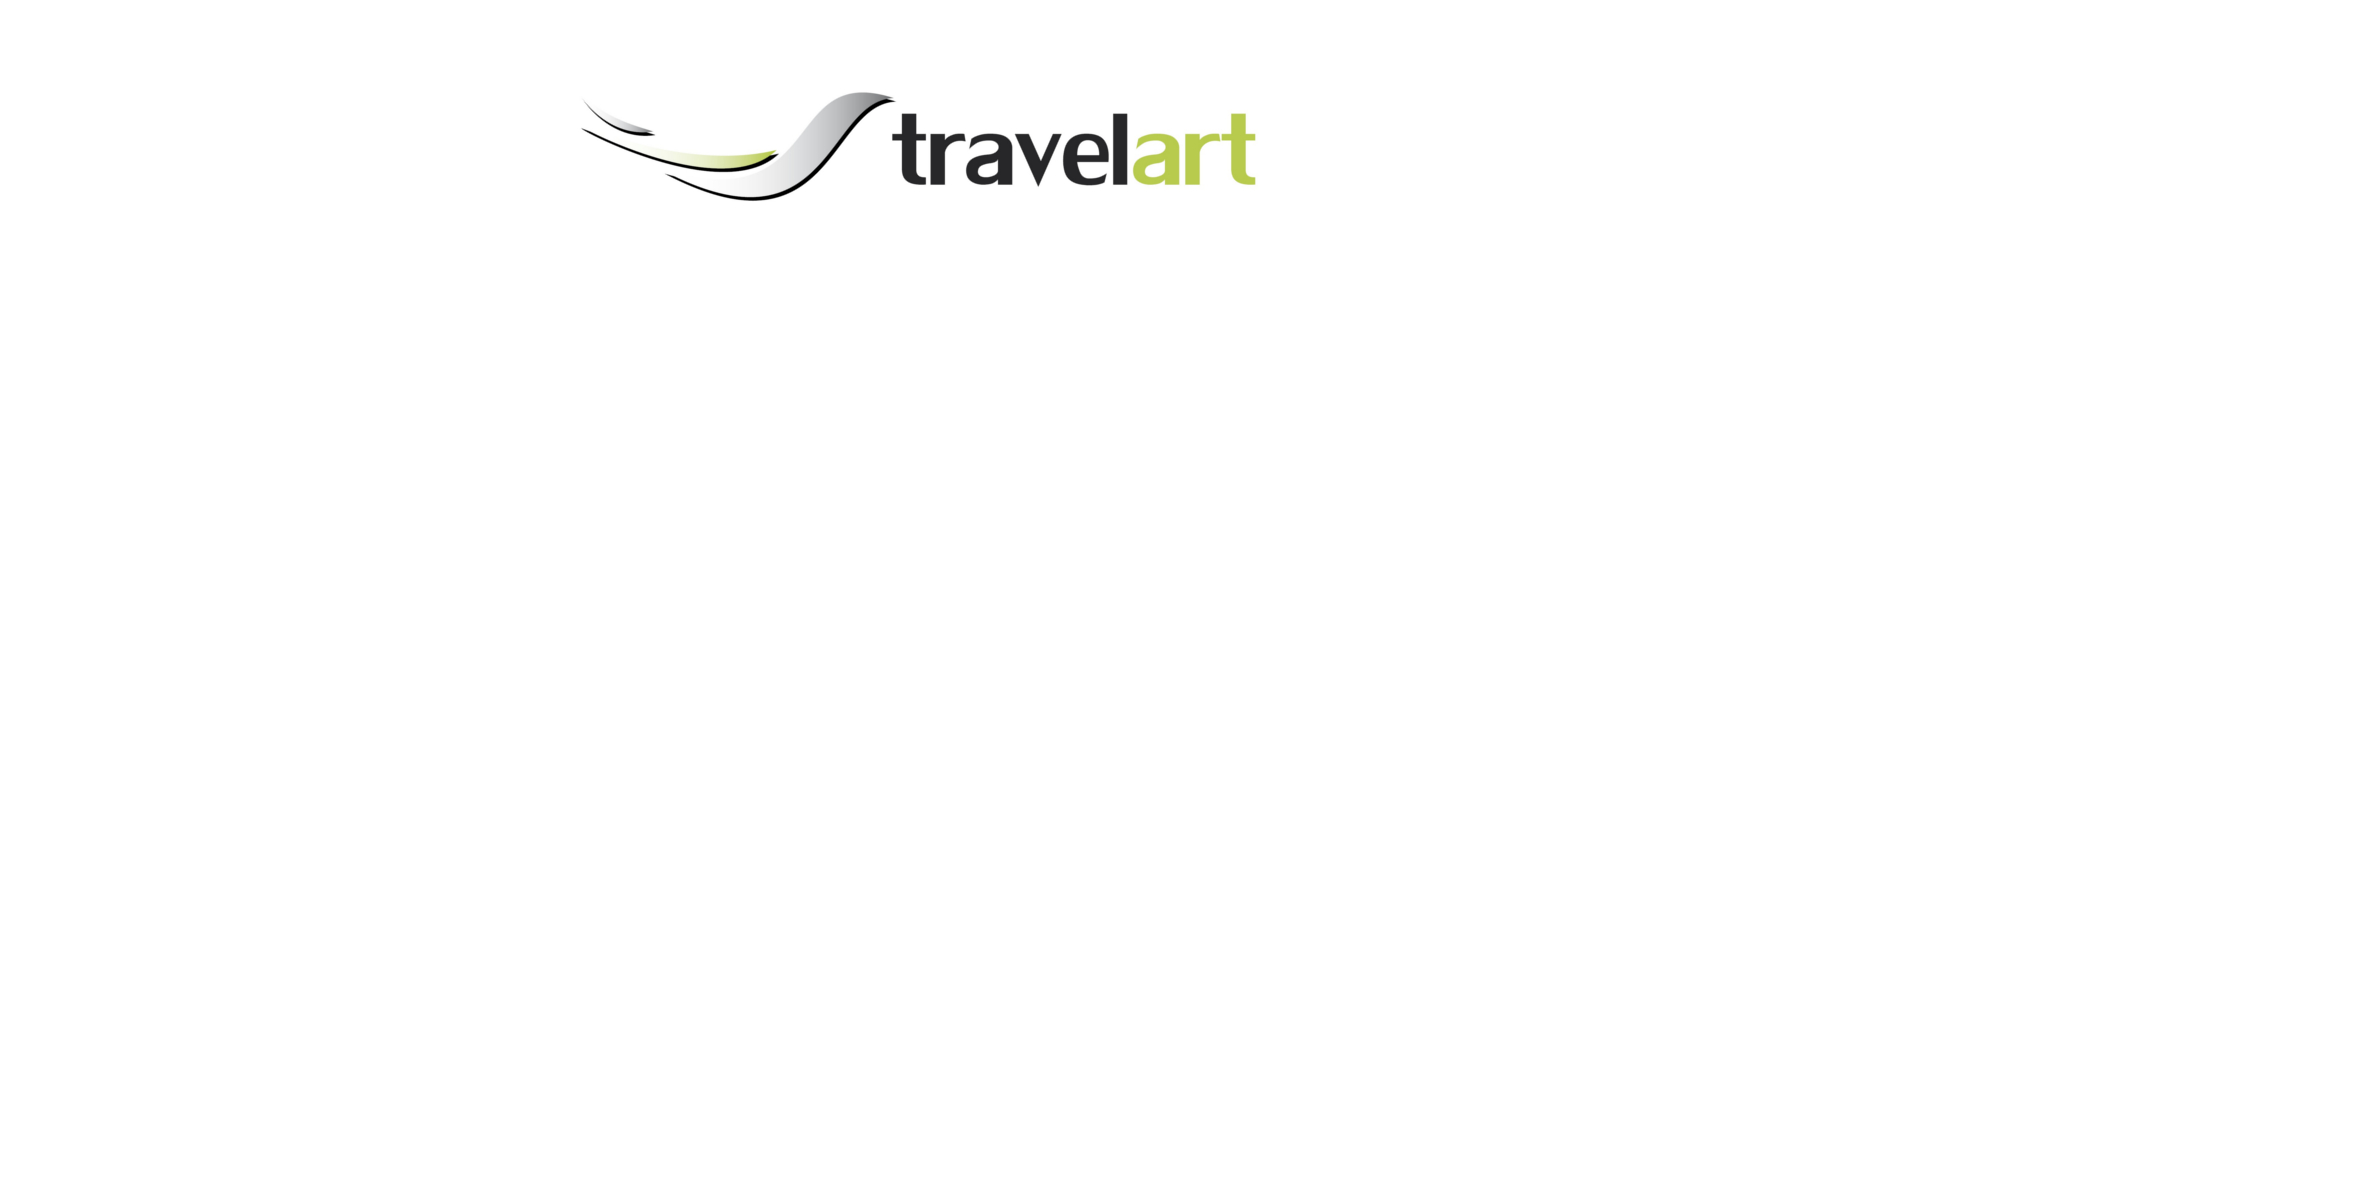 (c) Travel-art.biz